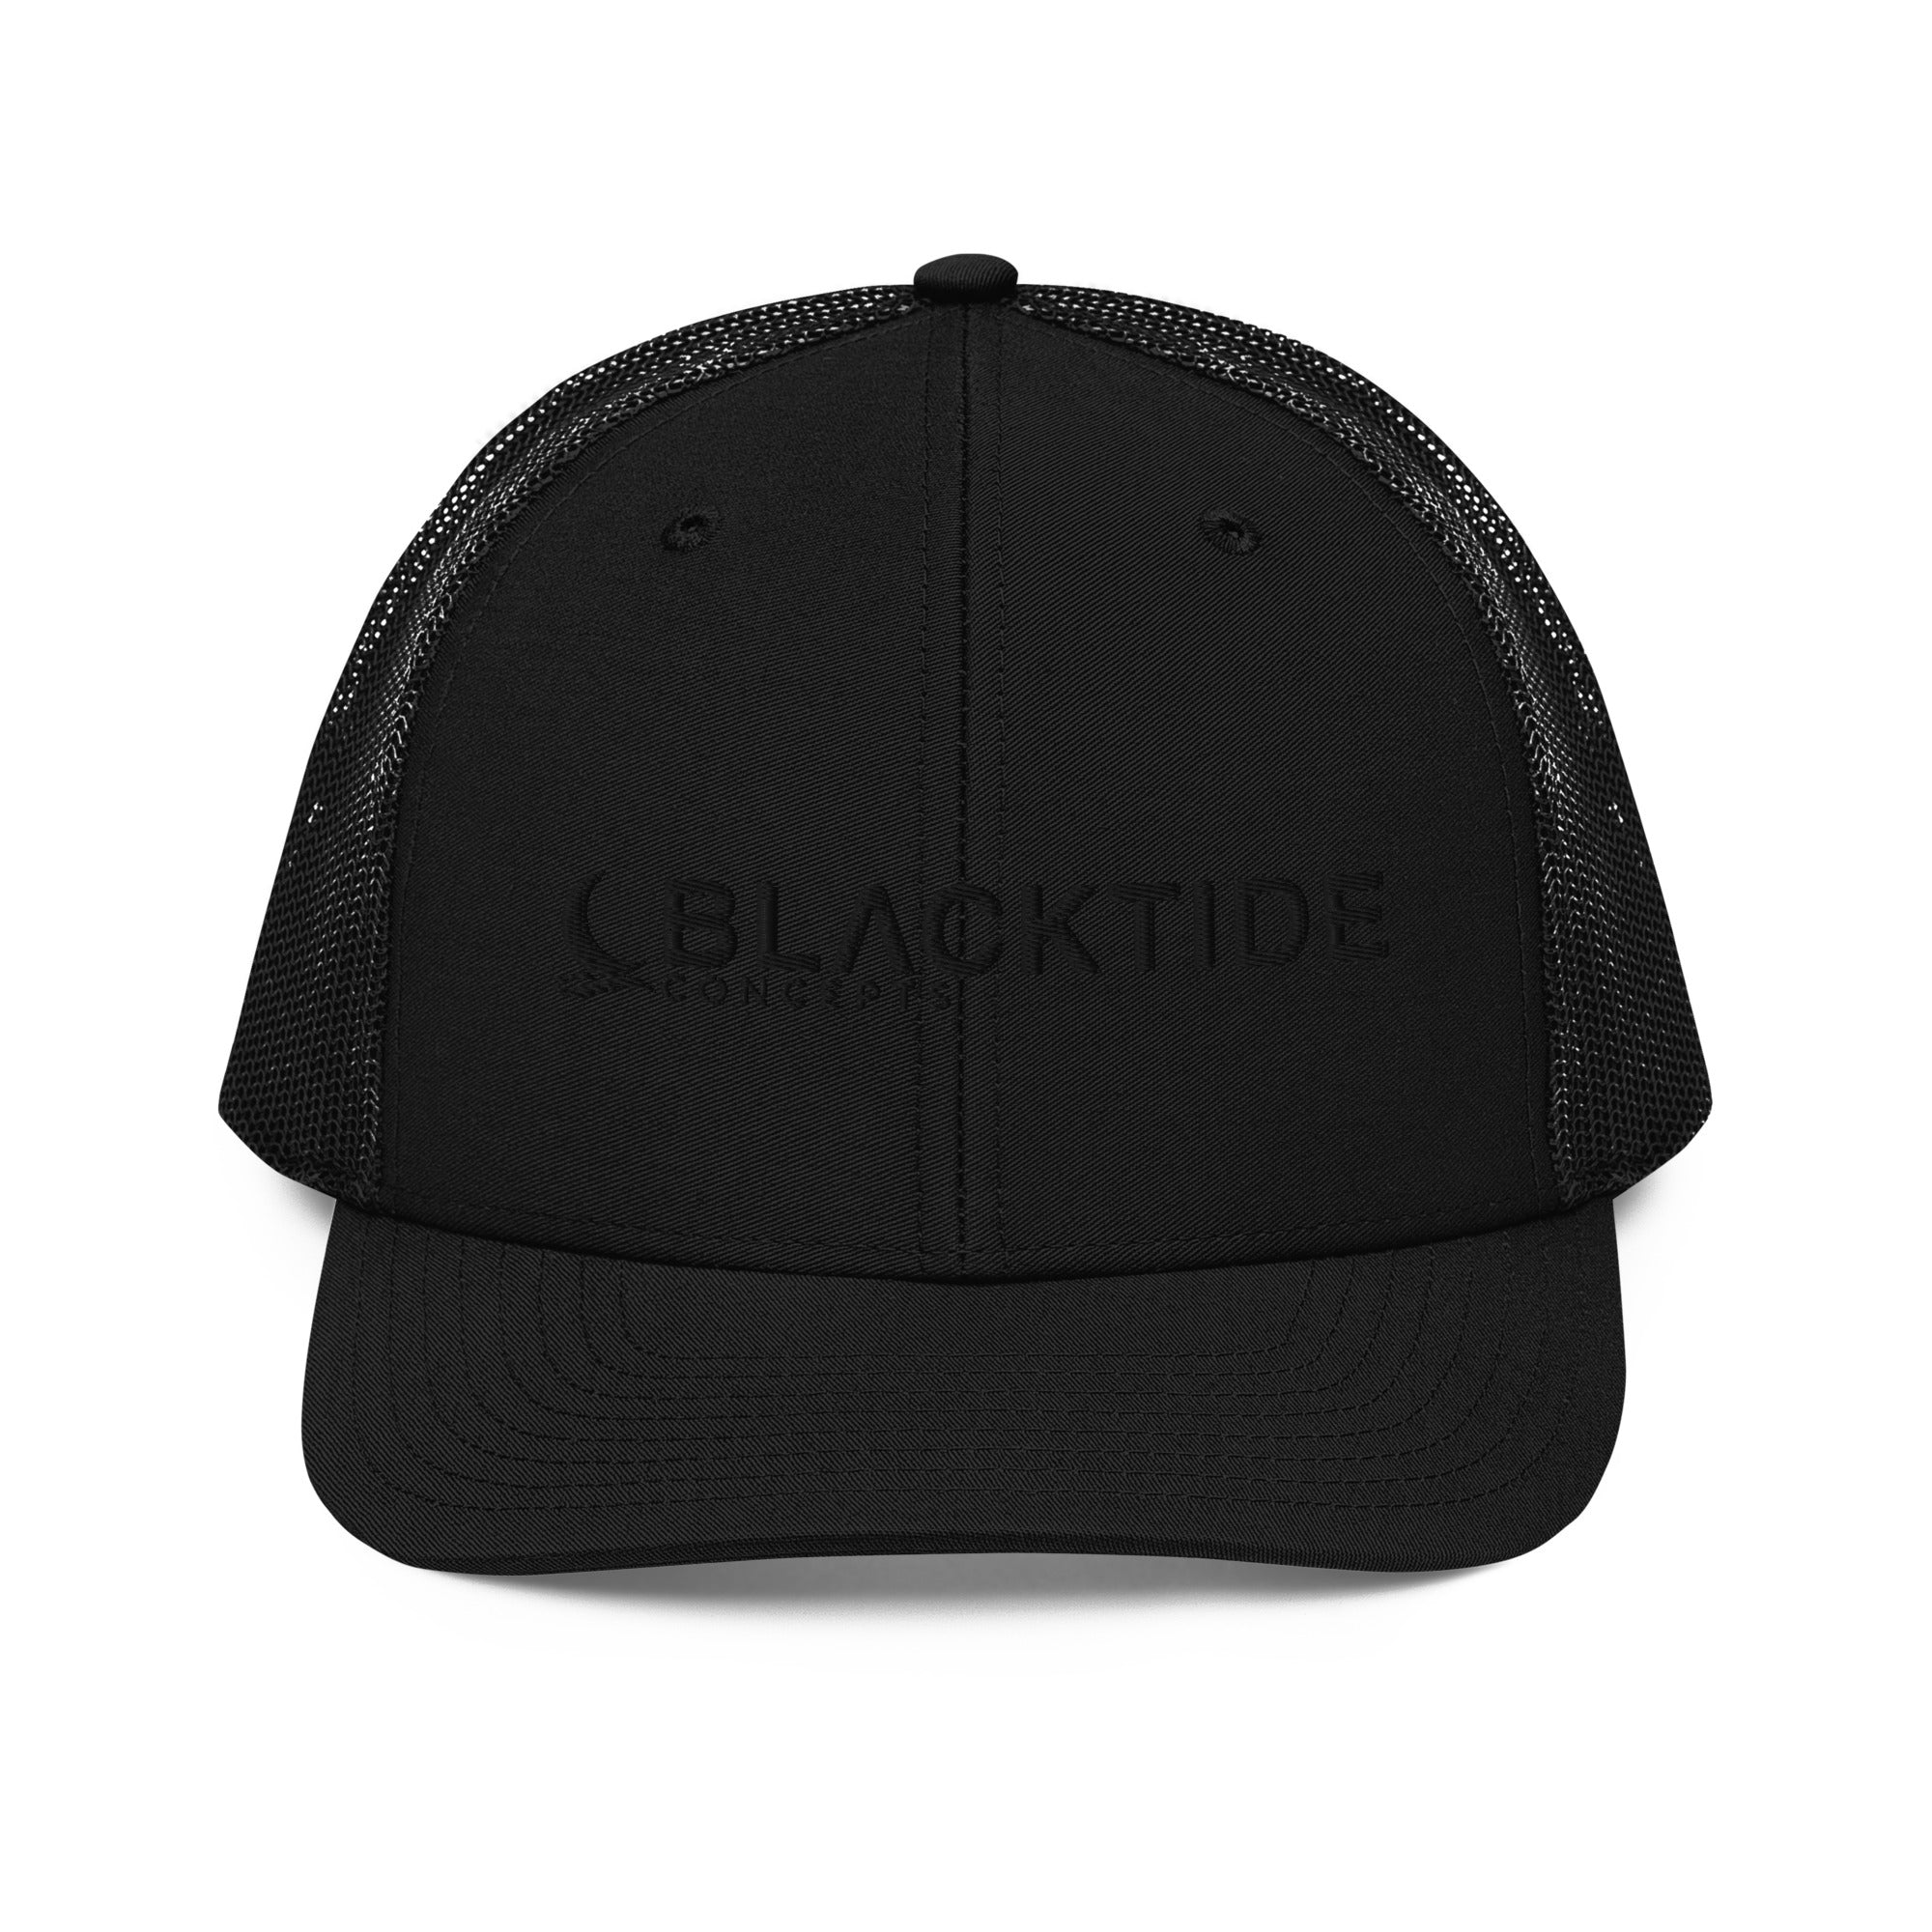 Blacktide Concepts Trucker Cap